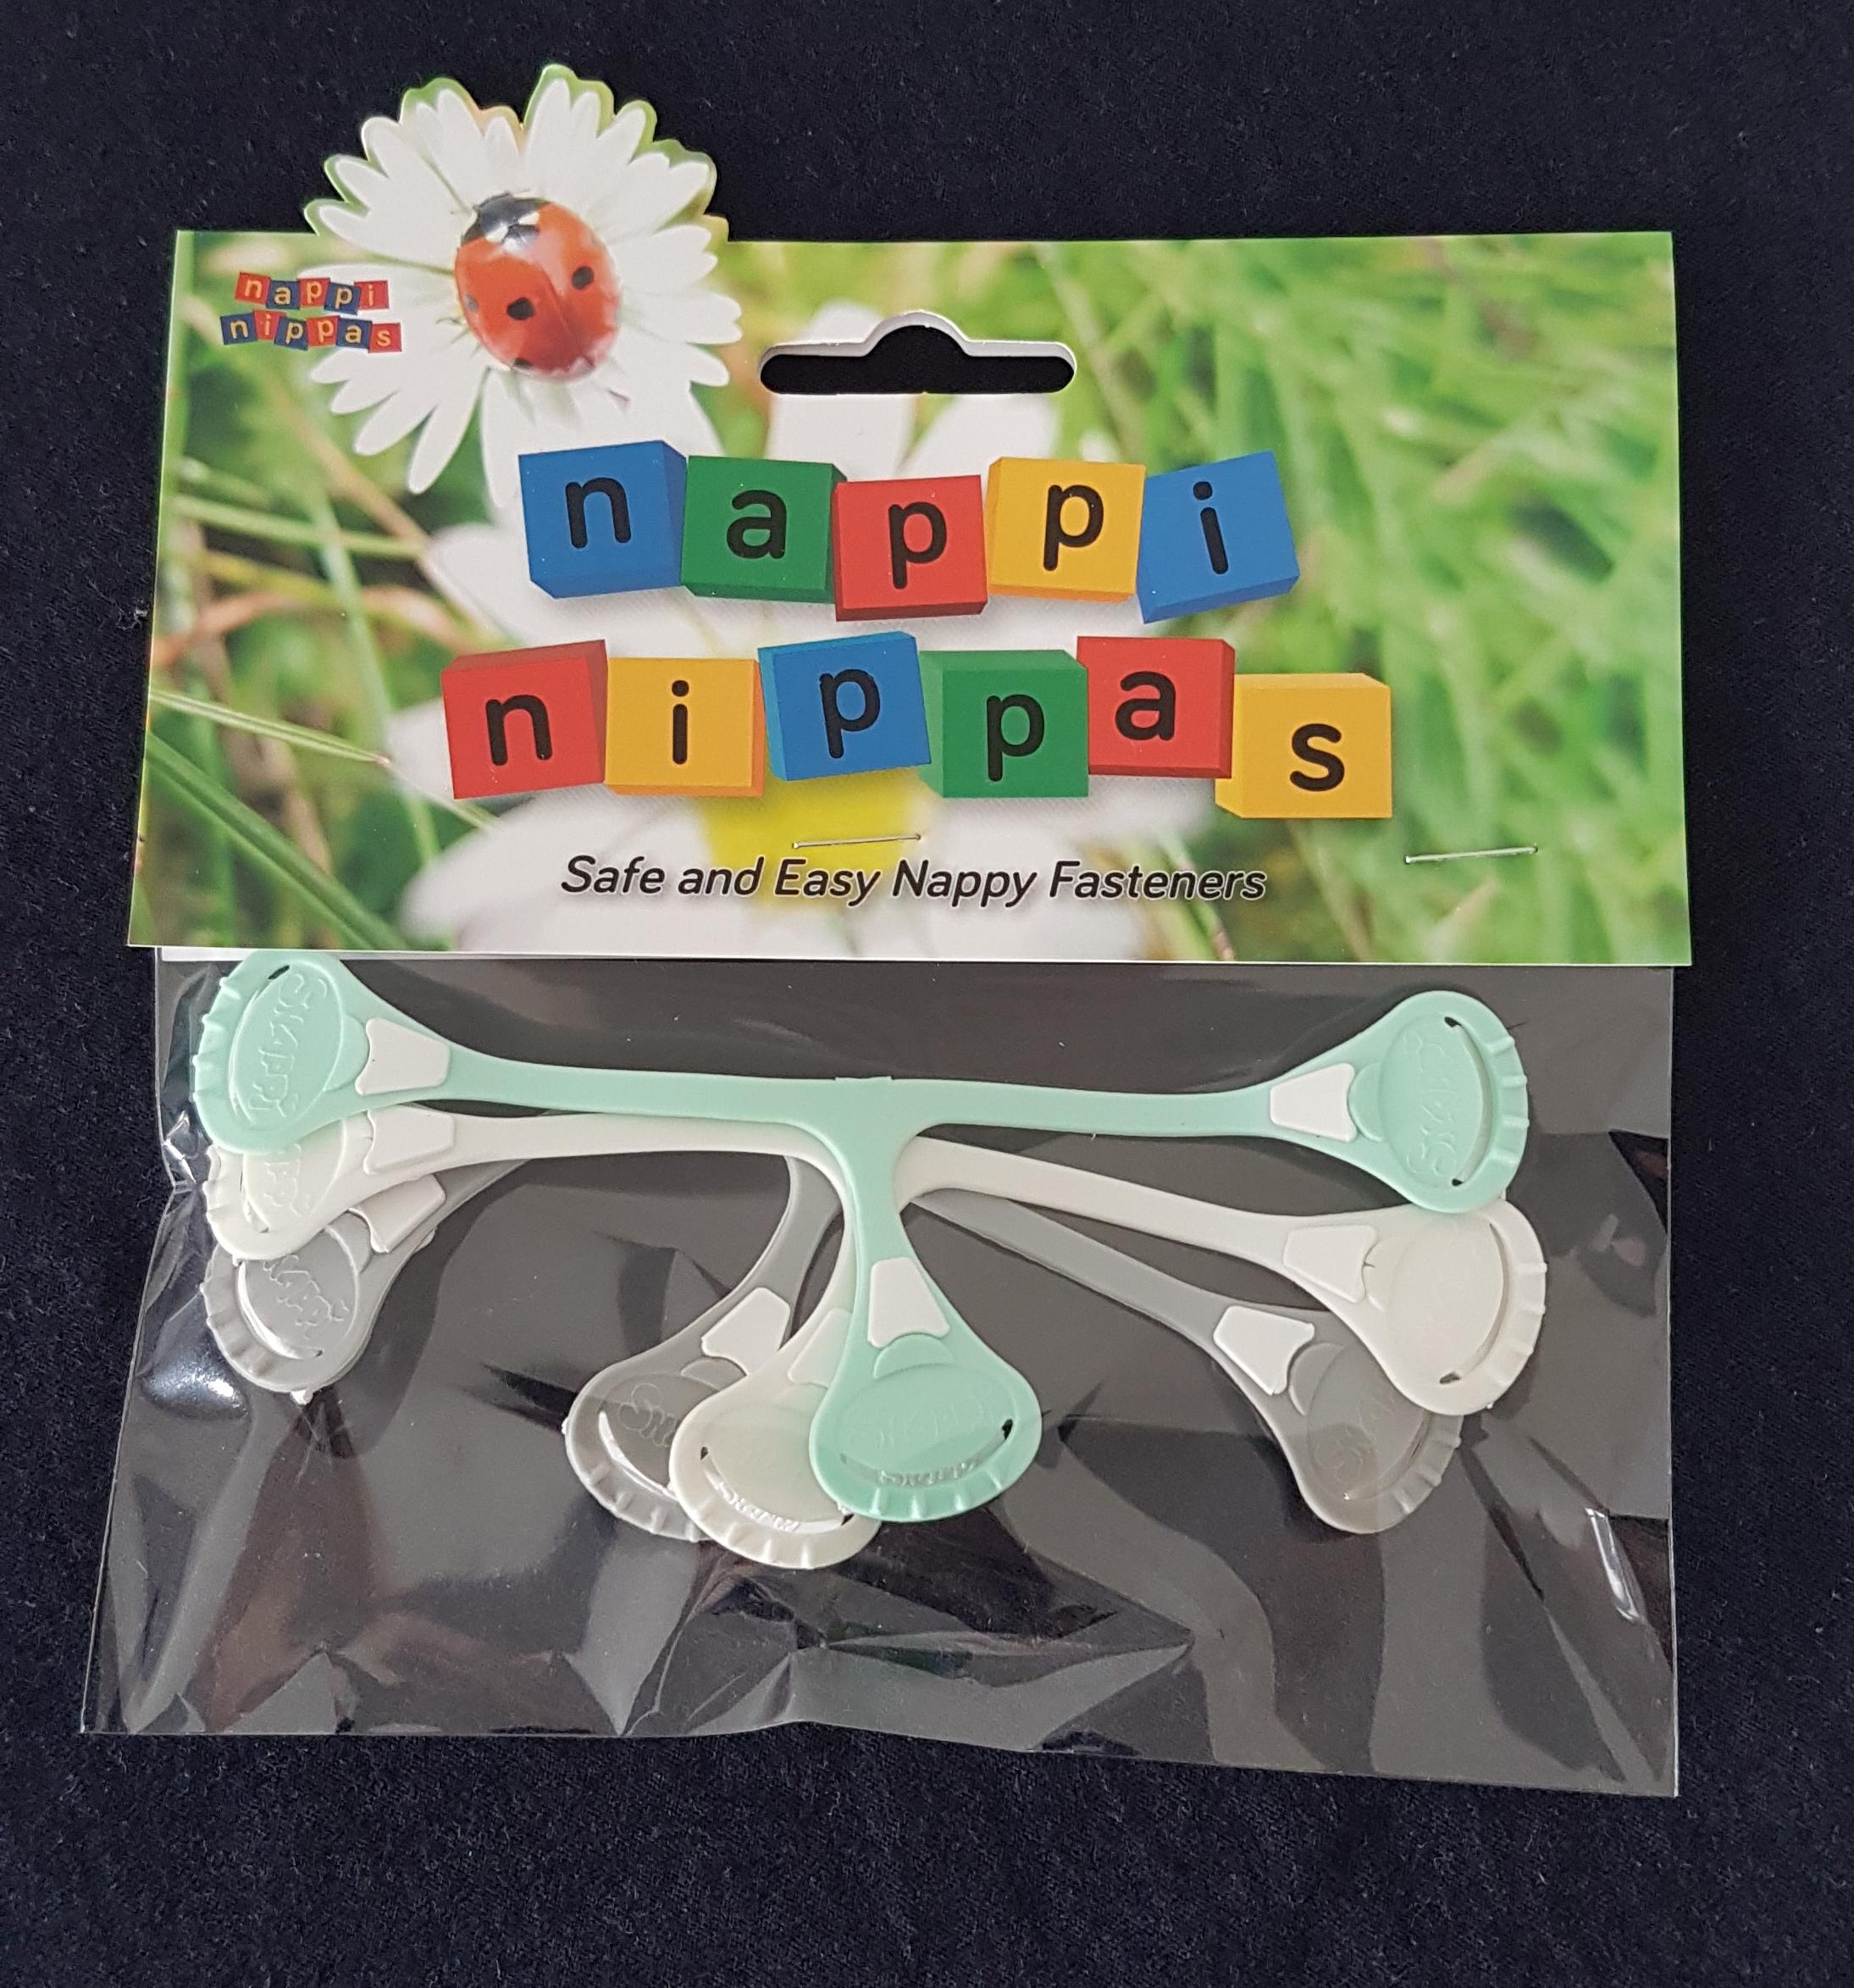 a 3 pack of nappi nippas